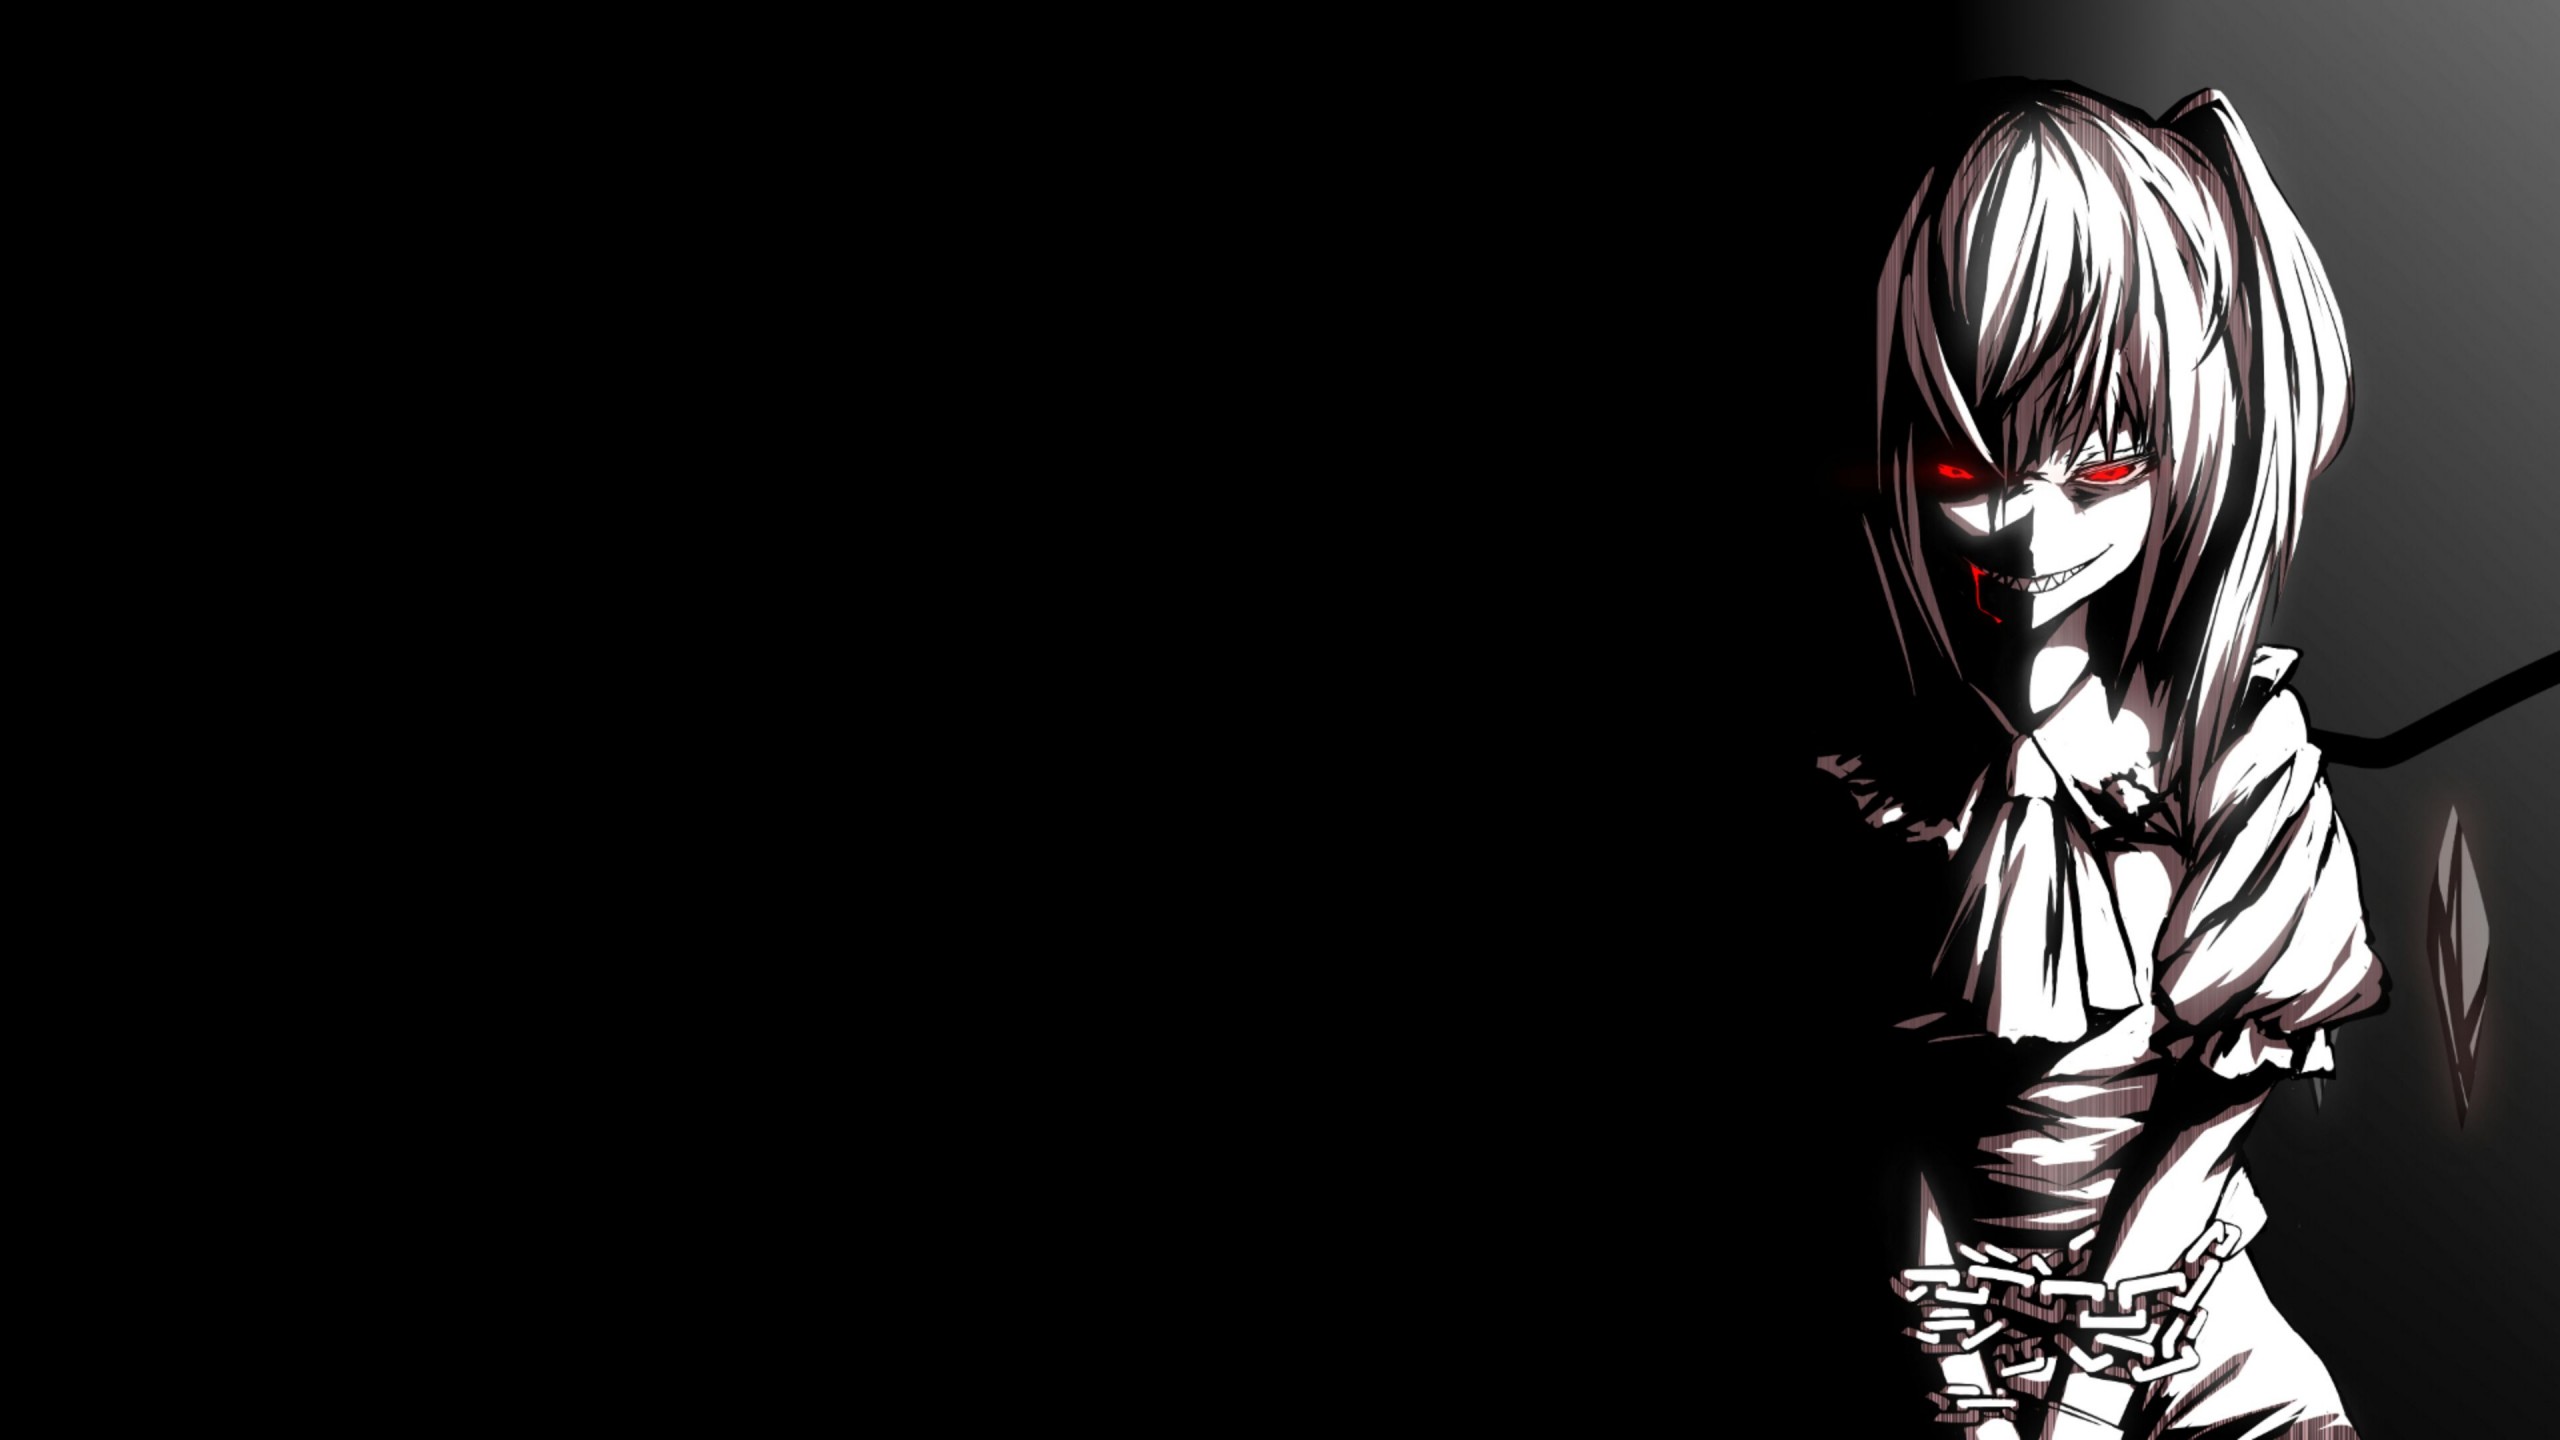 Ghouling 4k Anime Wallpaper